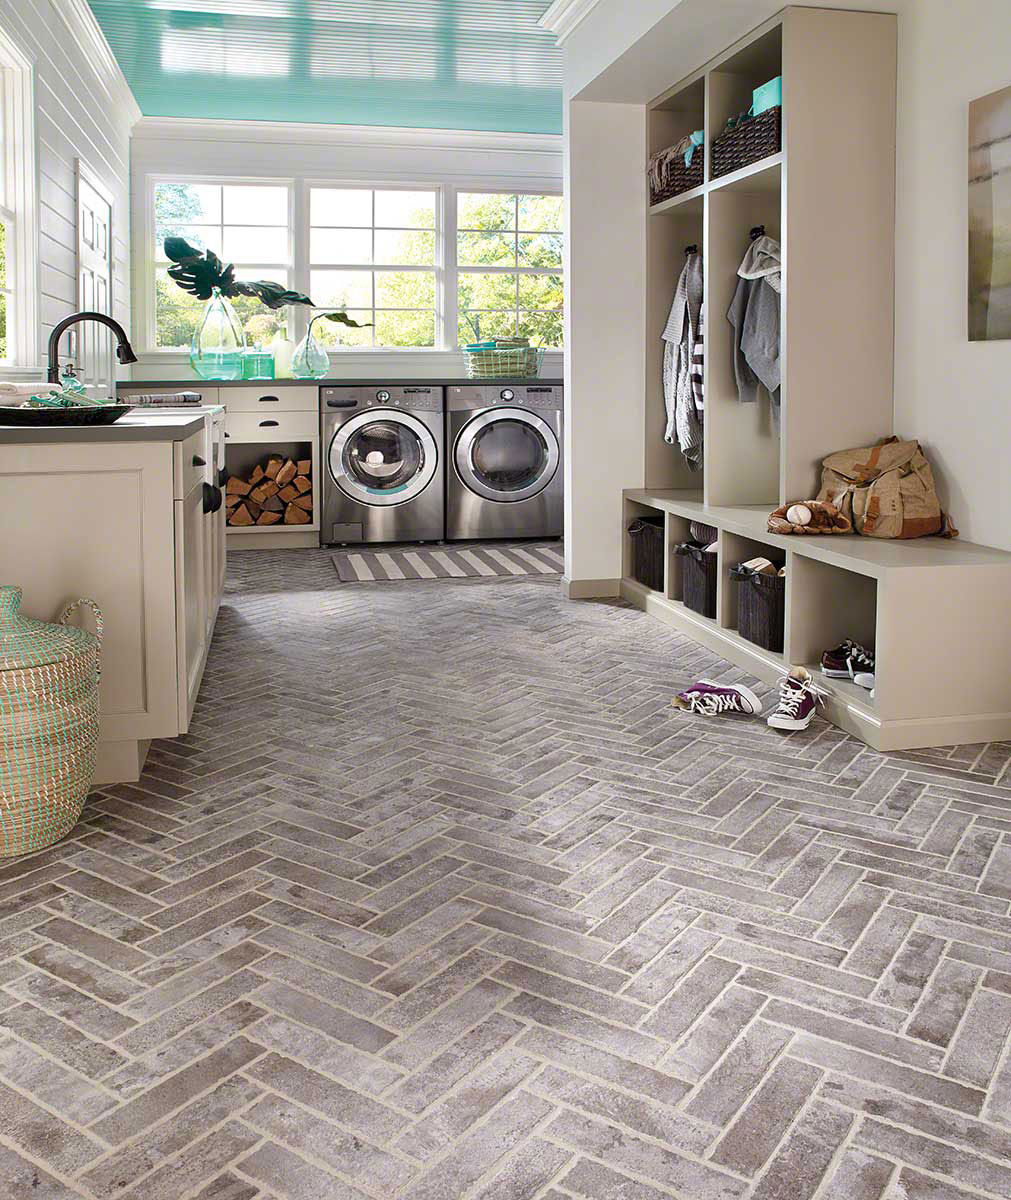 Brickstone Taupe 2x10 Brick Tile flooring in utility room